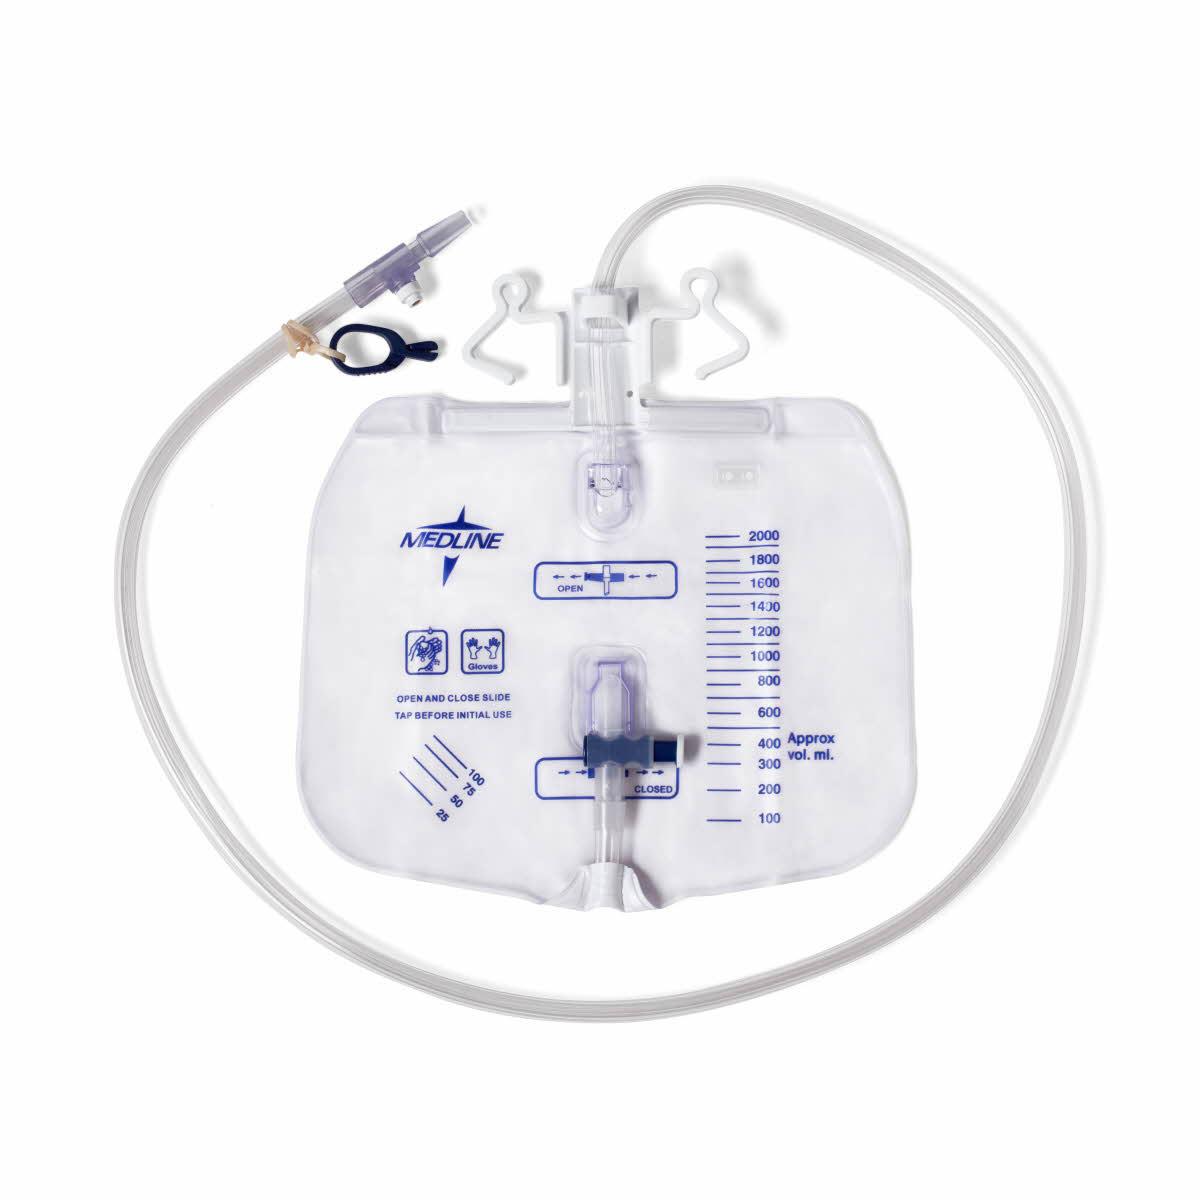 Urology drain bag with anti-reflux valve, 2000ML